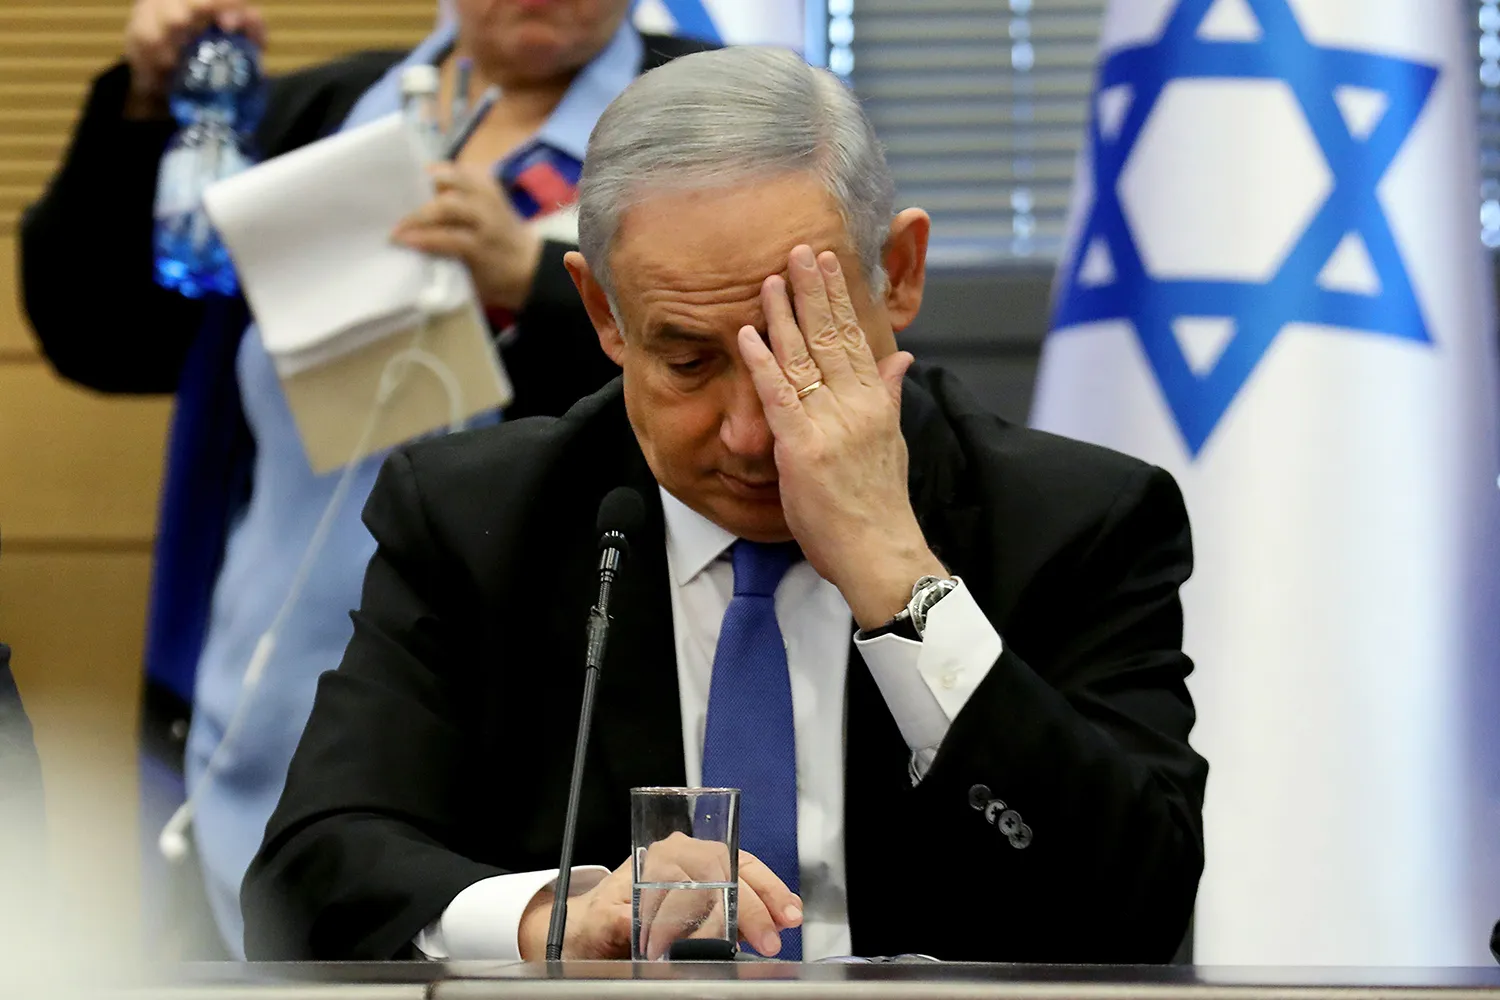 Netanyahu Got Dilemma: Juggling Money for Wars and Politics